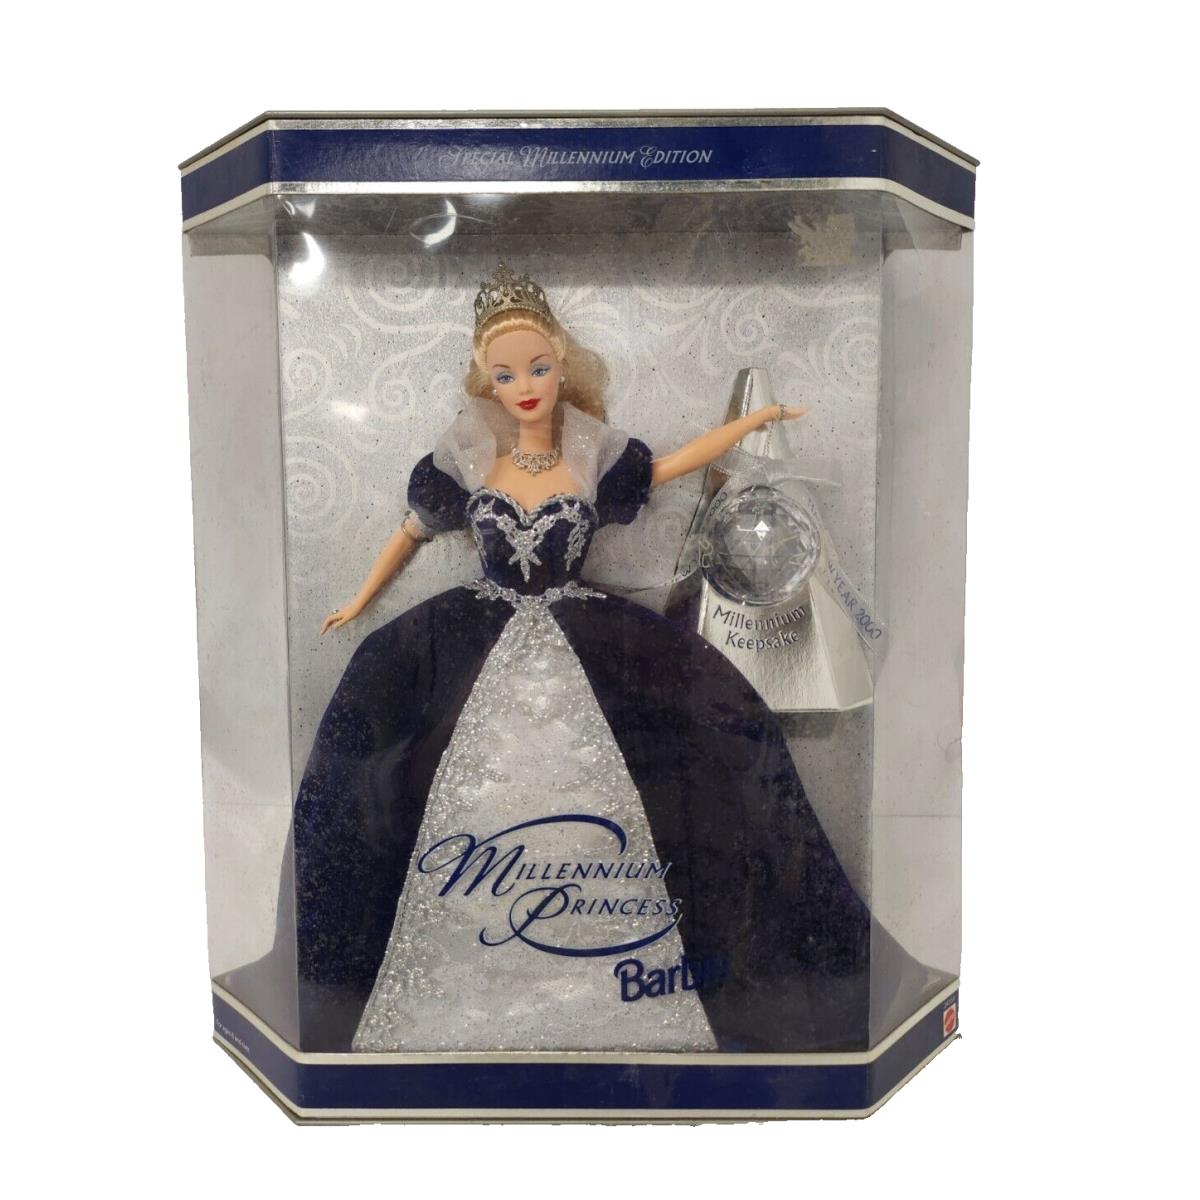 Vintage 1999 Millennium Princess Barbie Doll Special Edition Collectible